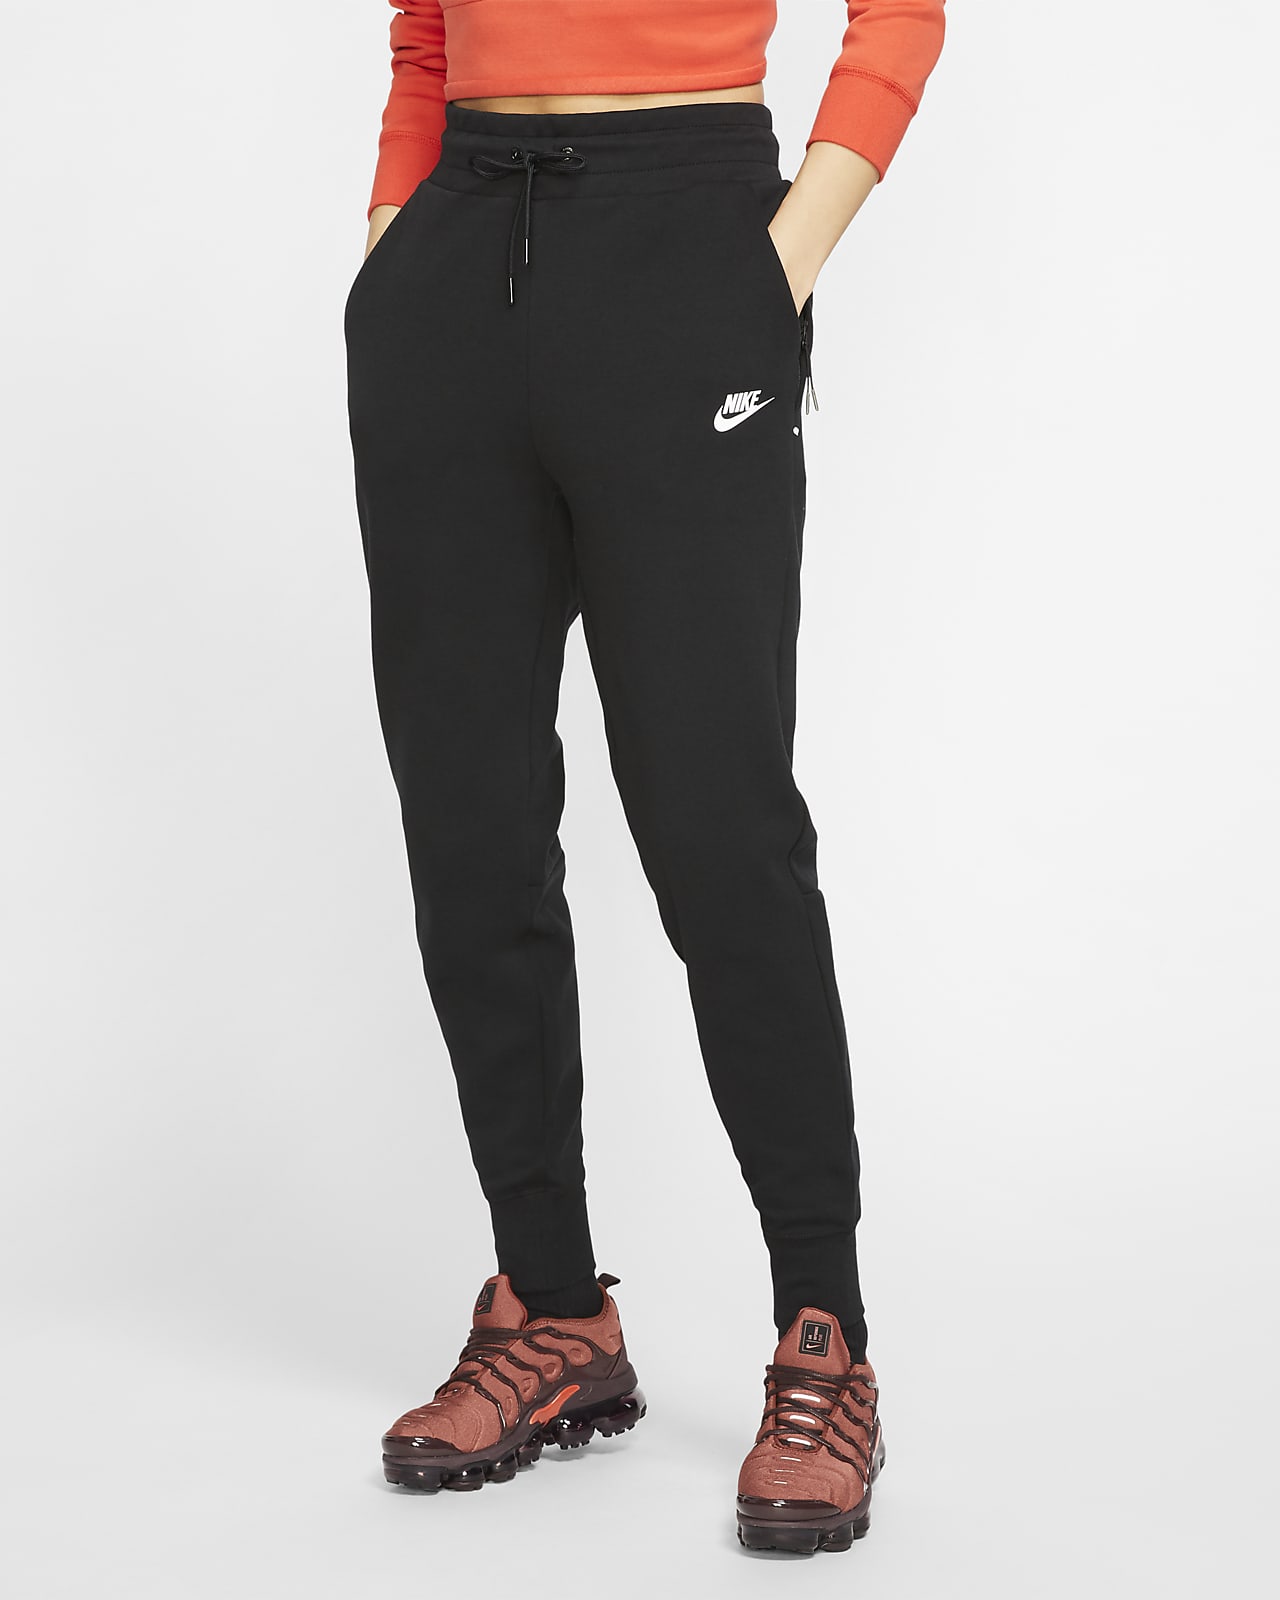 Nike Trousers for Women